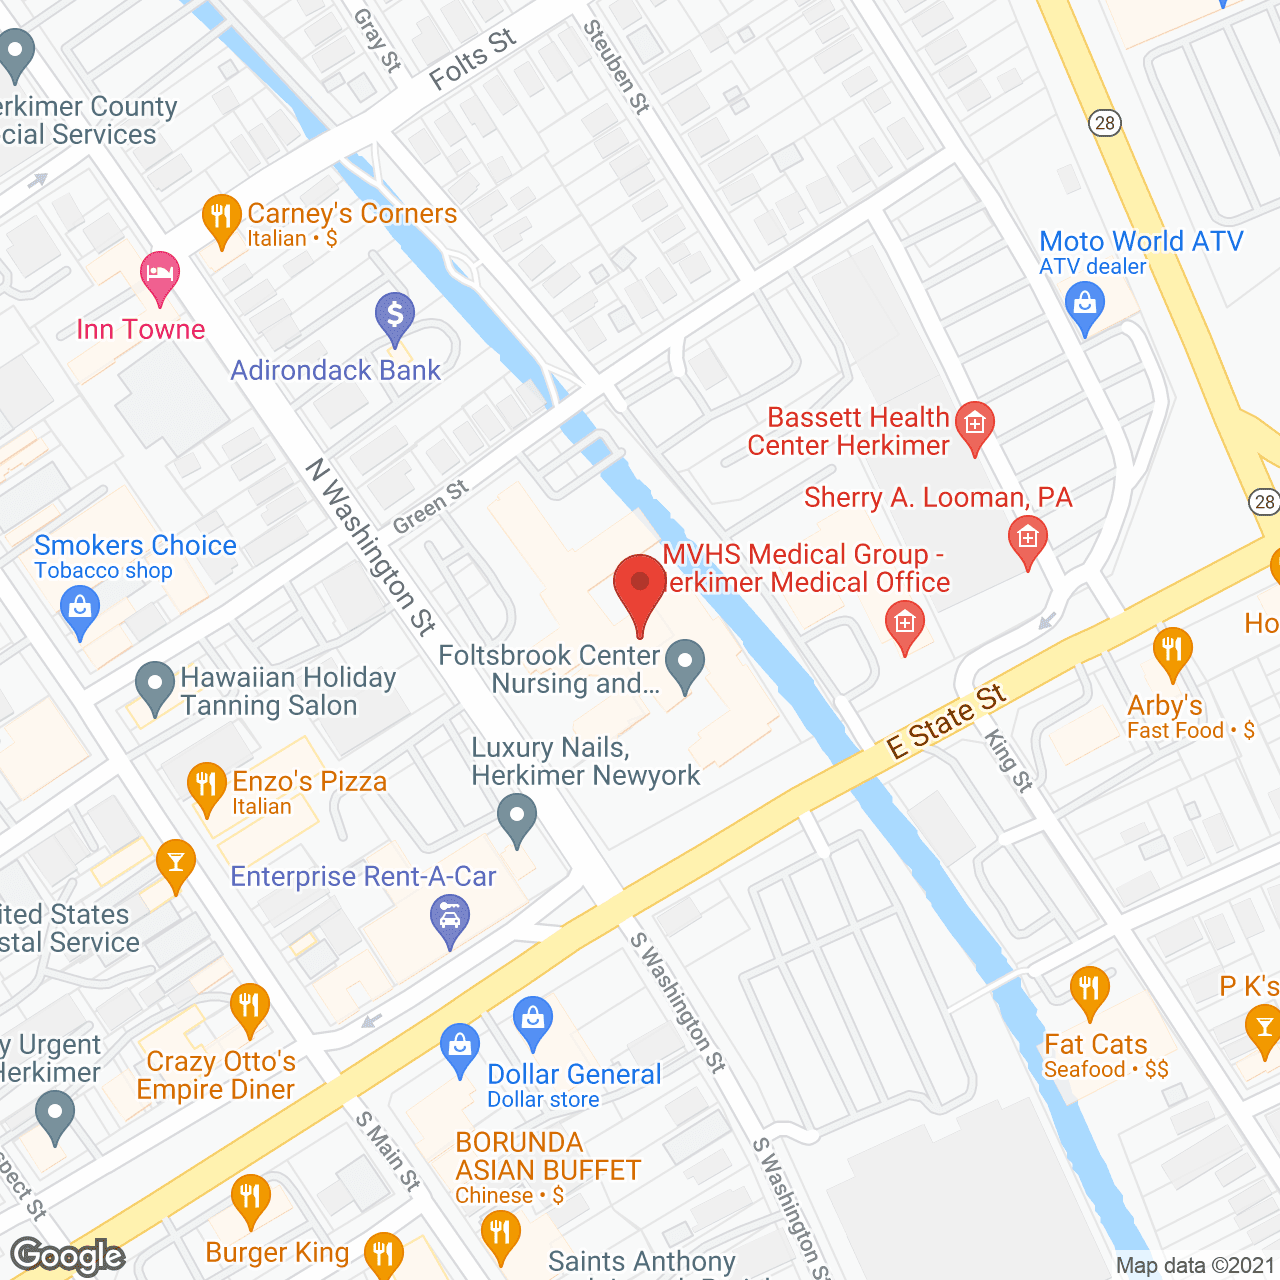 Foltsbrook Center for Senior Living in google map